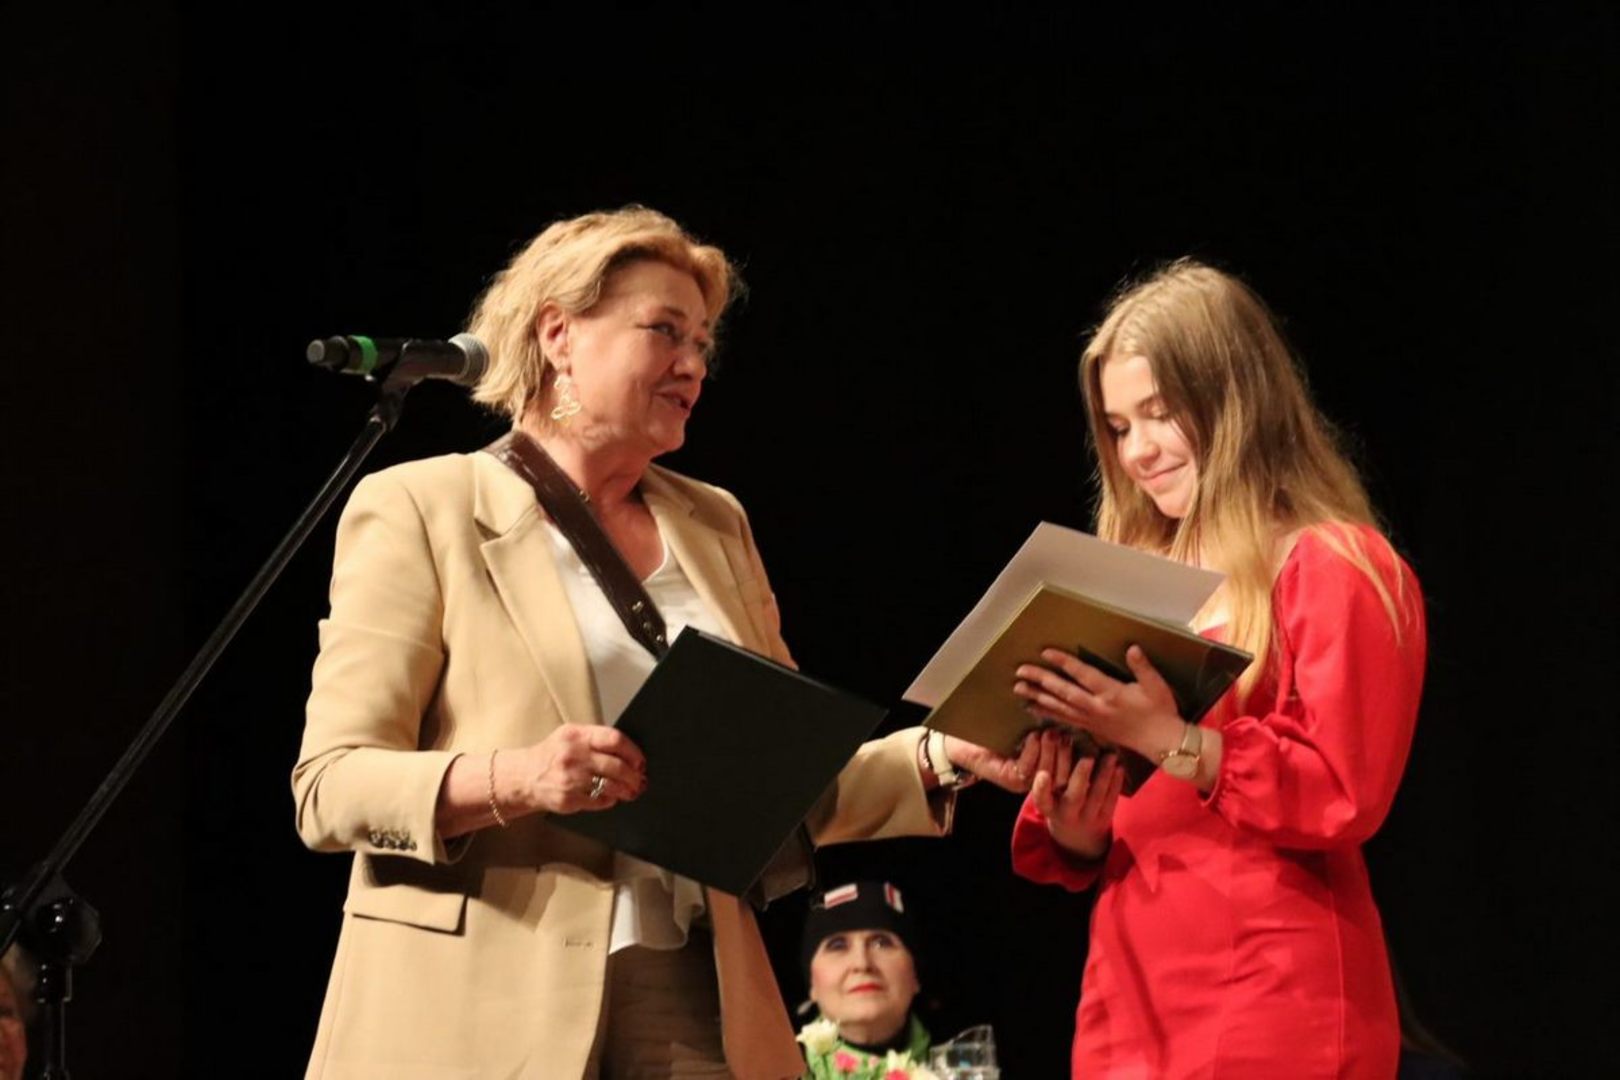 Nagrodę Kamili wręcza p. M. Ostrowska – Królikowska